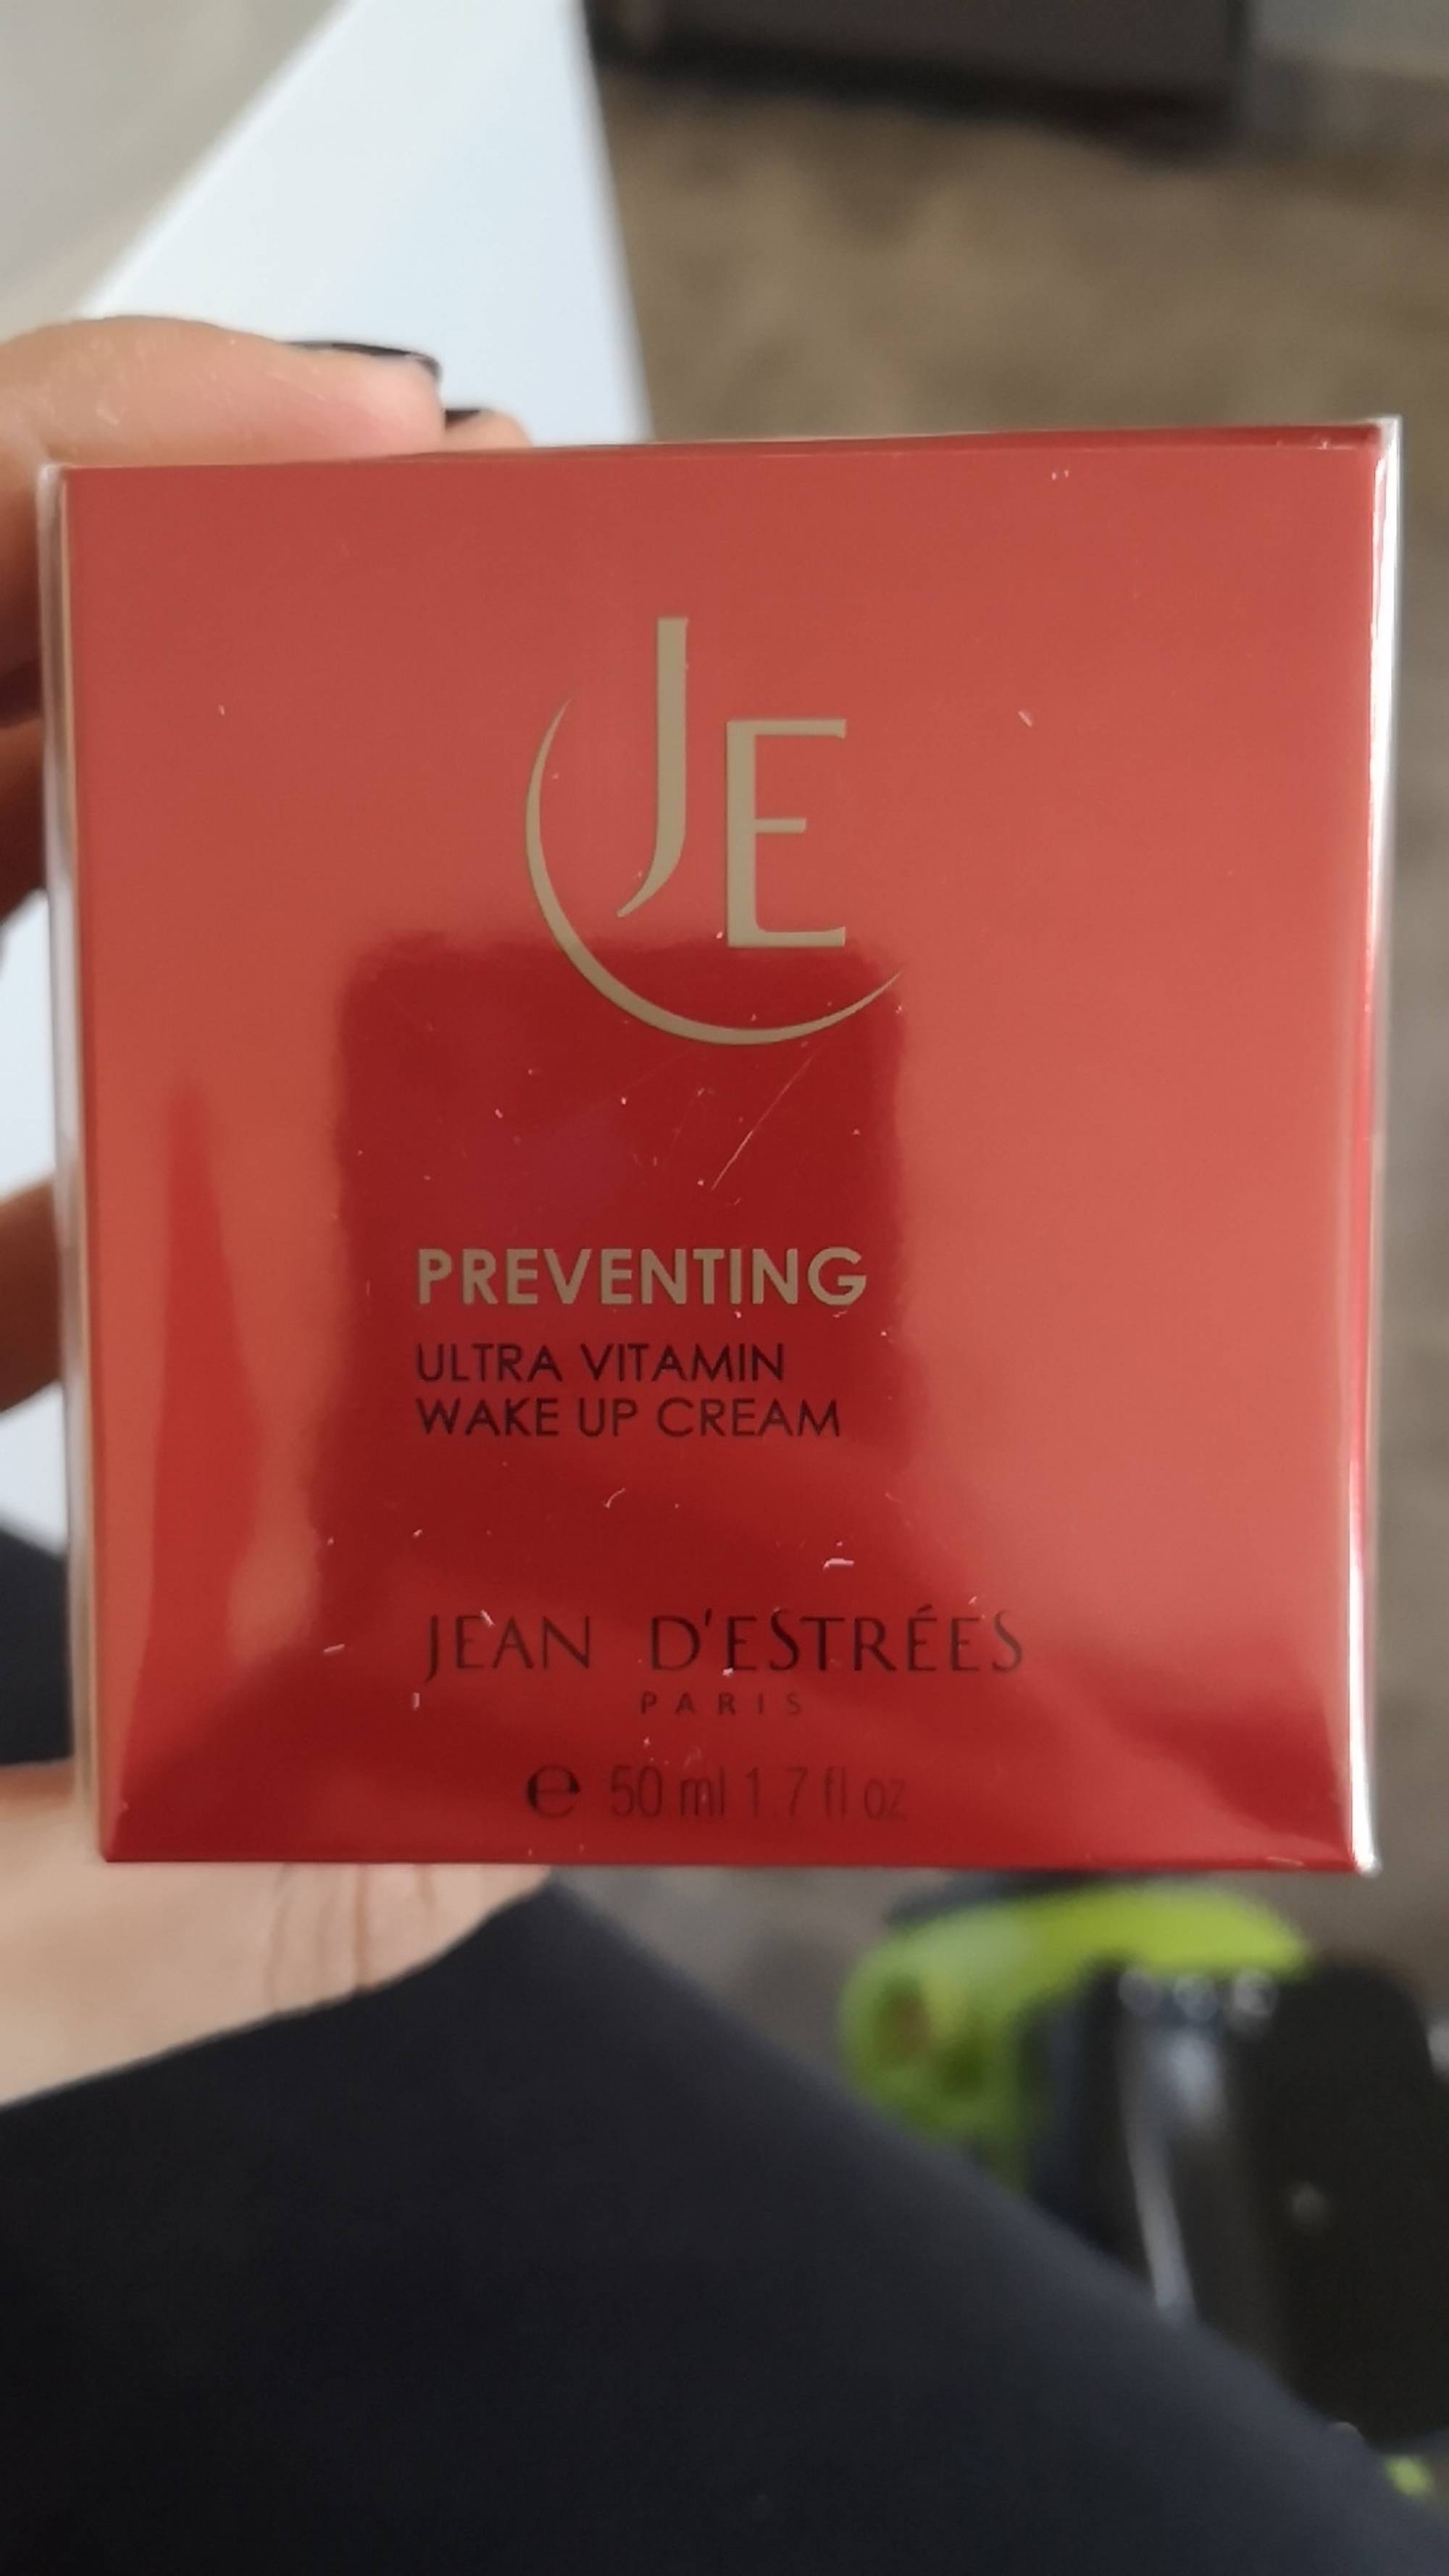 JEAN D'ESTRÉES PARIS - Preventing - Ultra vitamin wake up cream